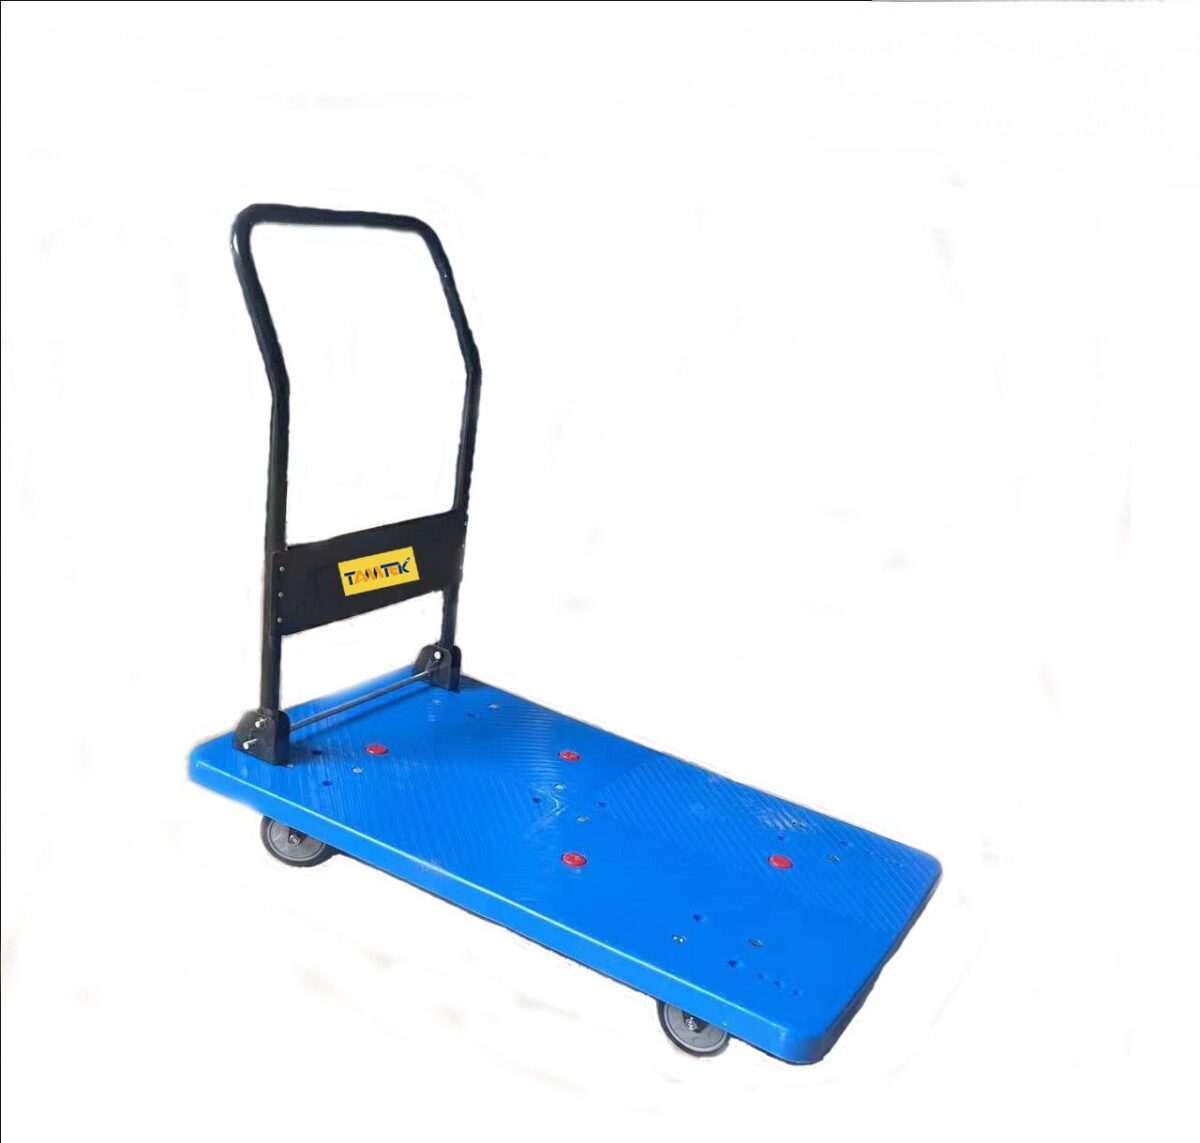 Tamtek Metal Platform Trolley Foldable 600 kg weight capacity with Rubber Handle, 5 Nylon Tyres, Heavy Material Trasport, Blue